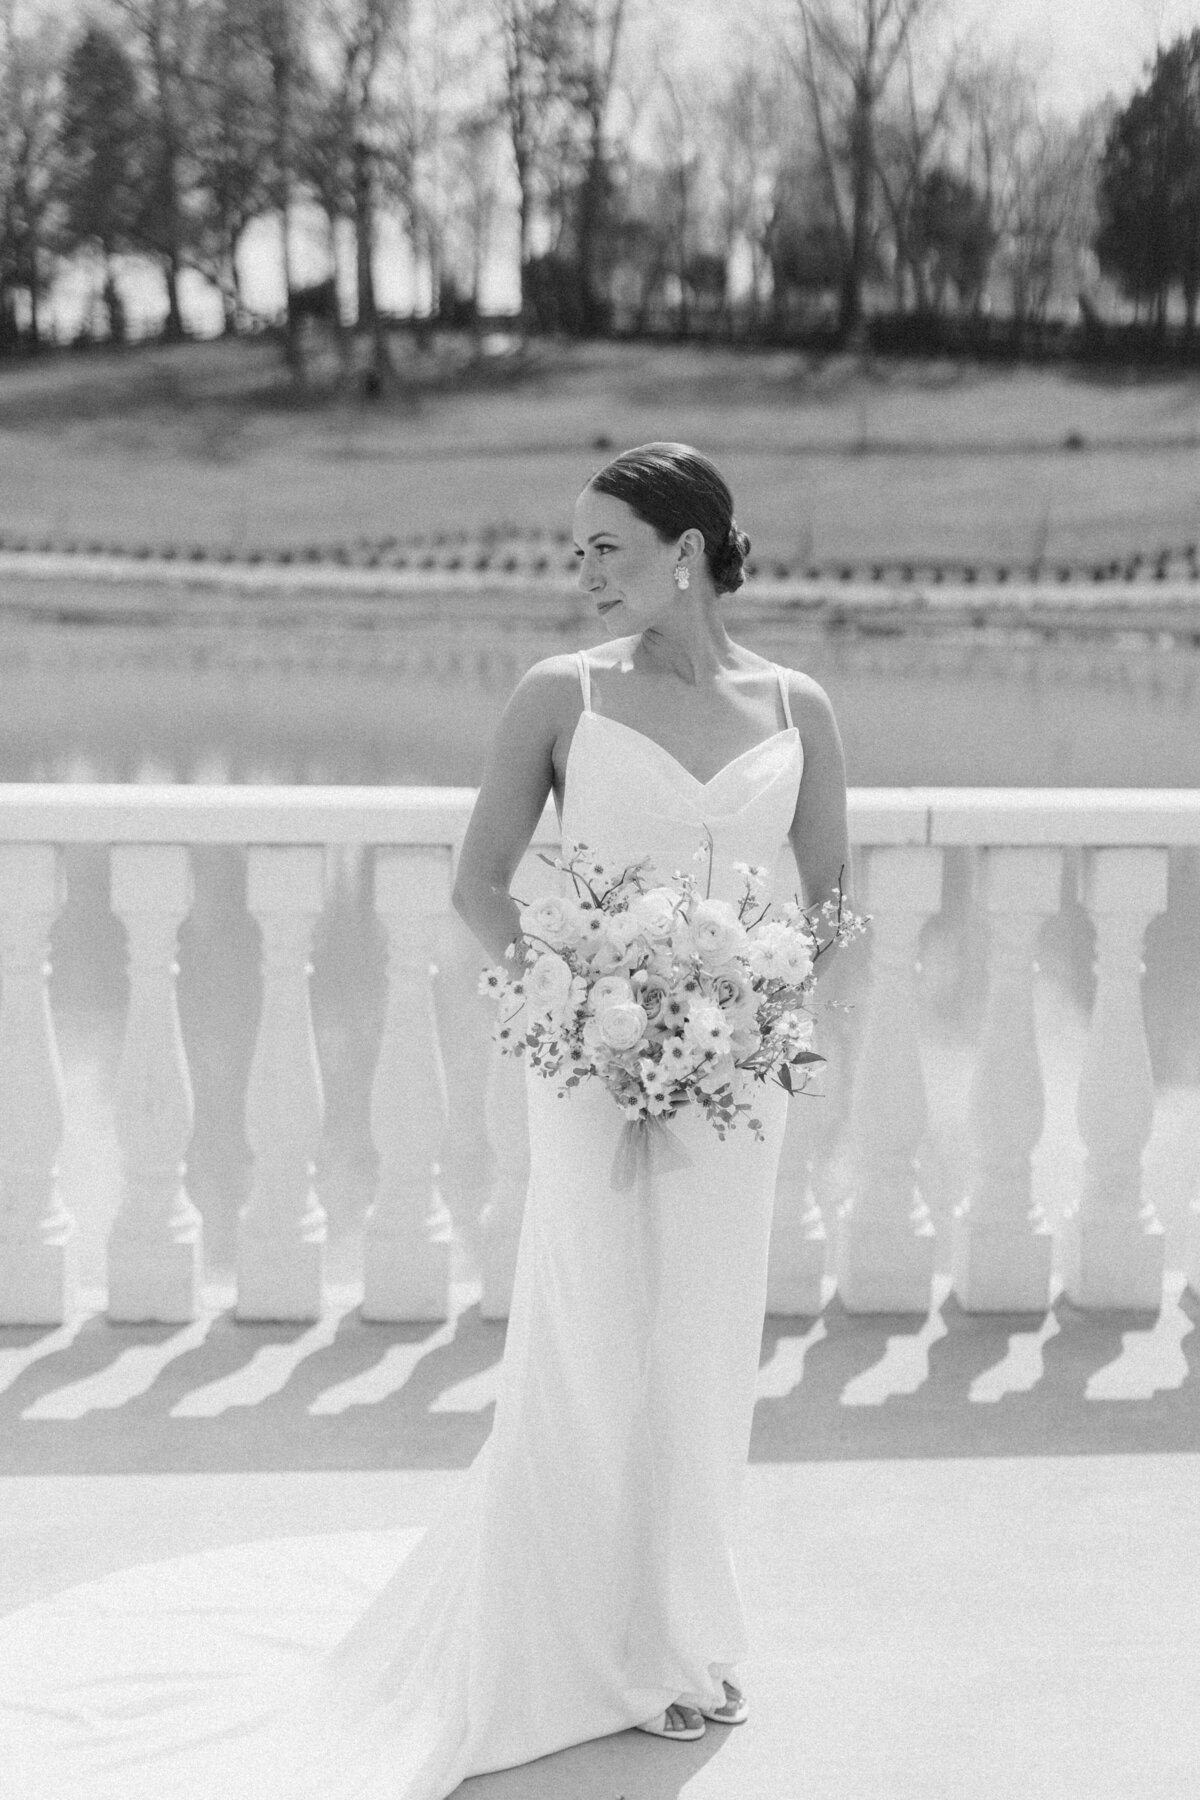 Sarah Rae Floral Designs Wedding Event Florist Flowers Kentucky Chic Whimsical Romantic Weddings1